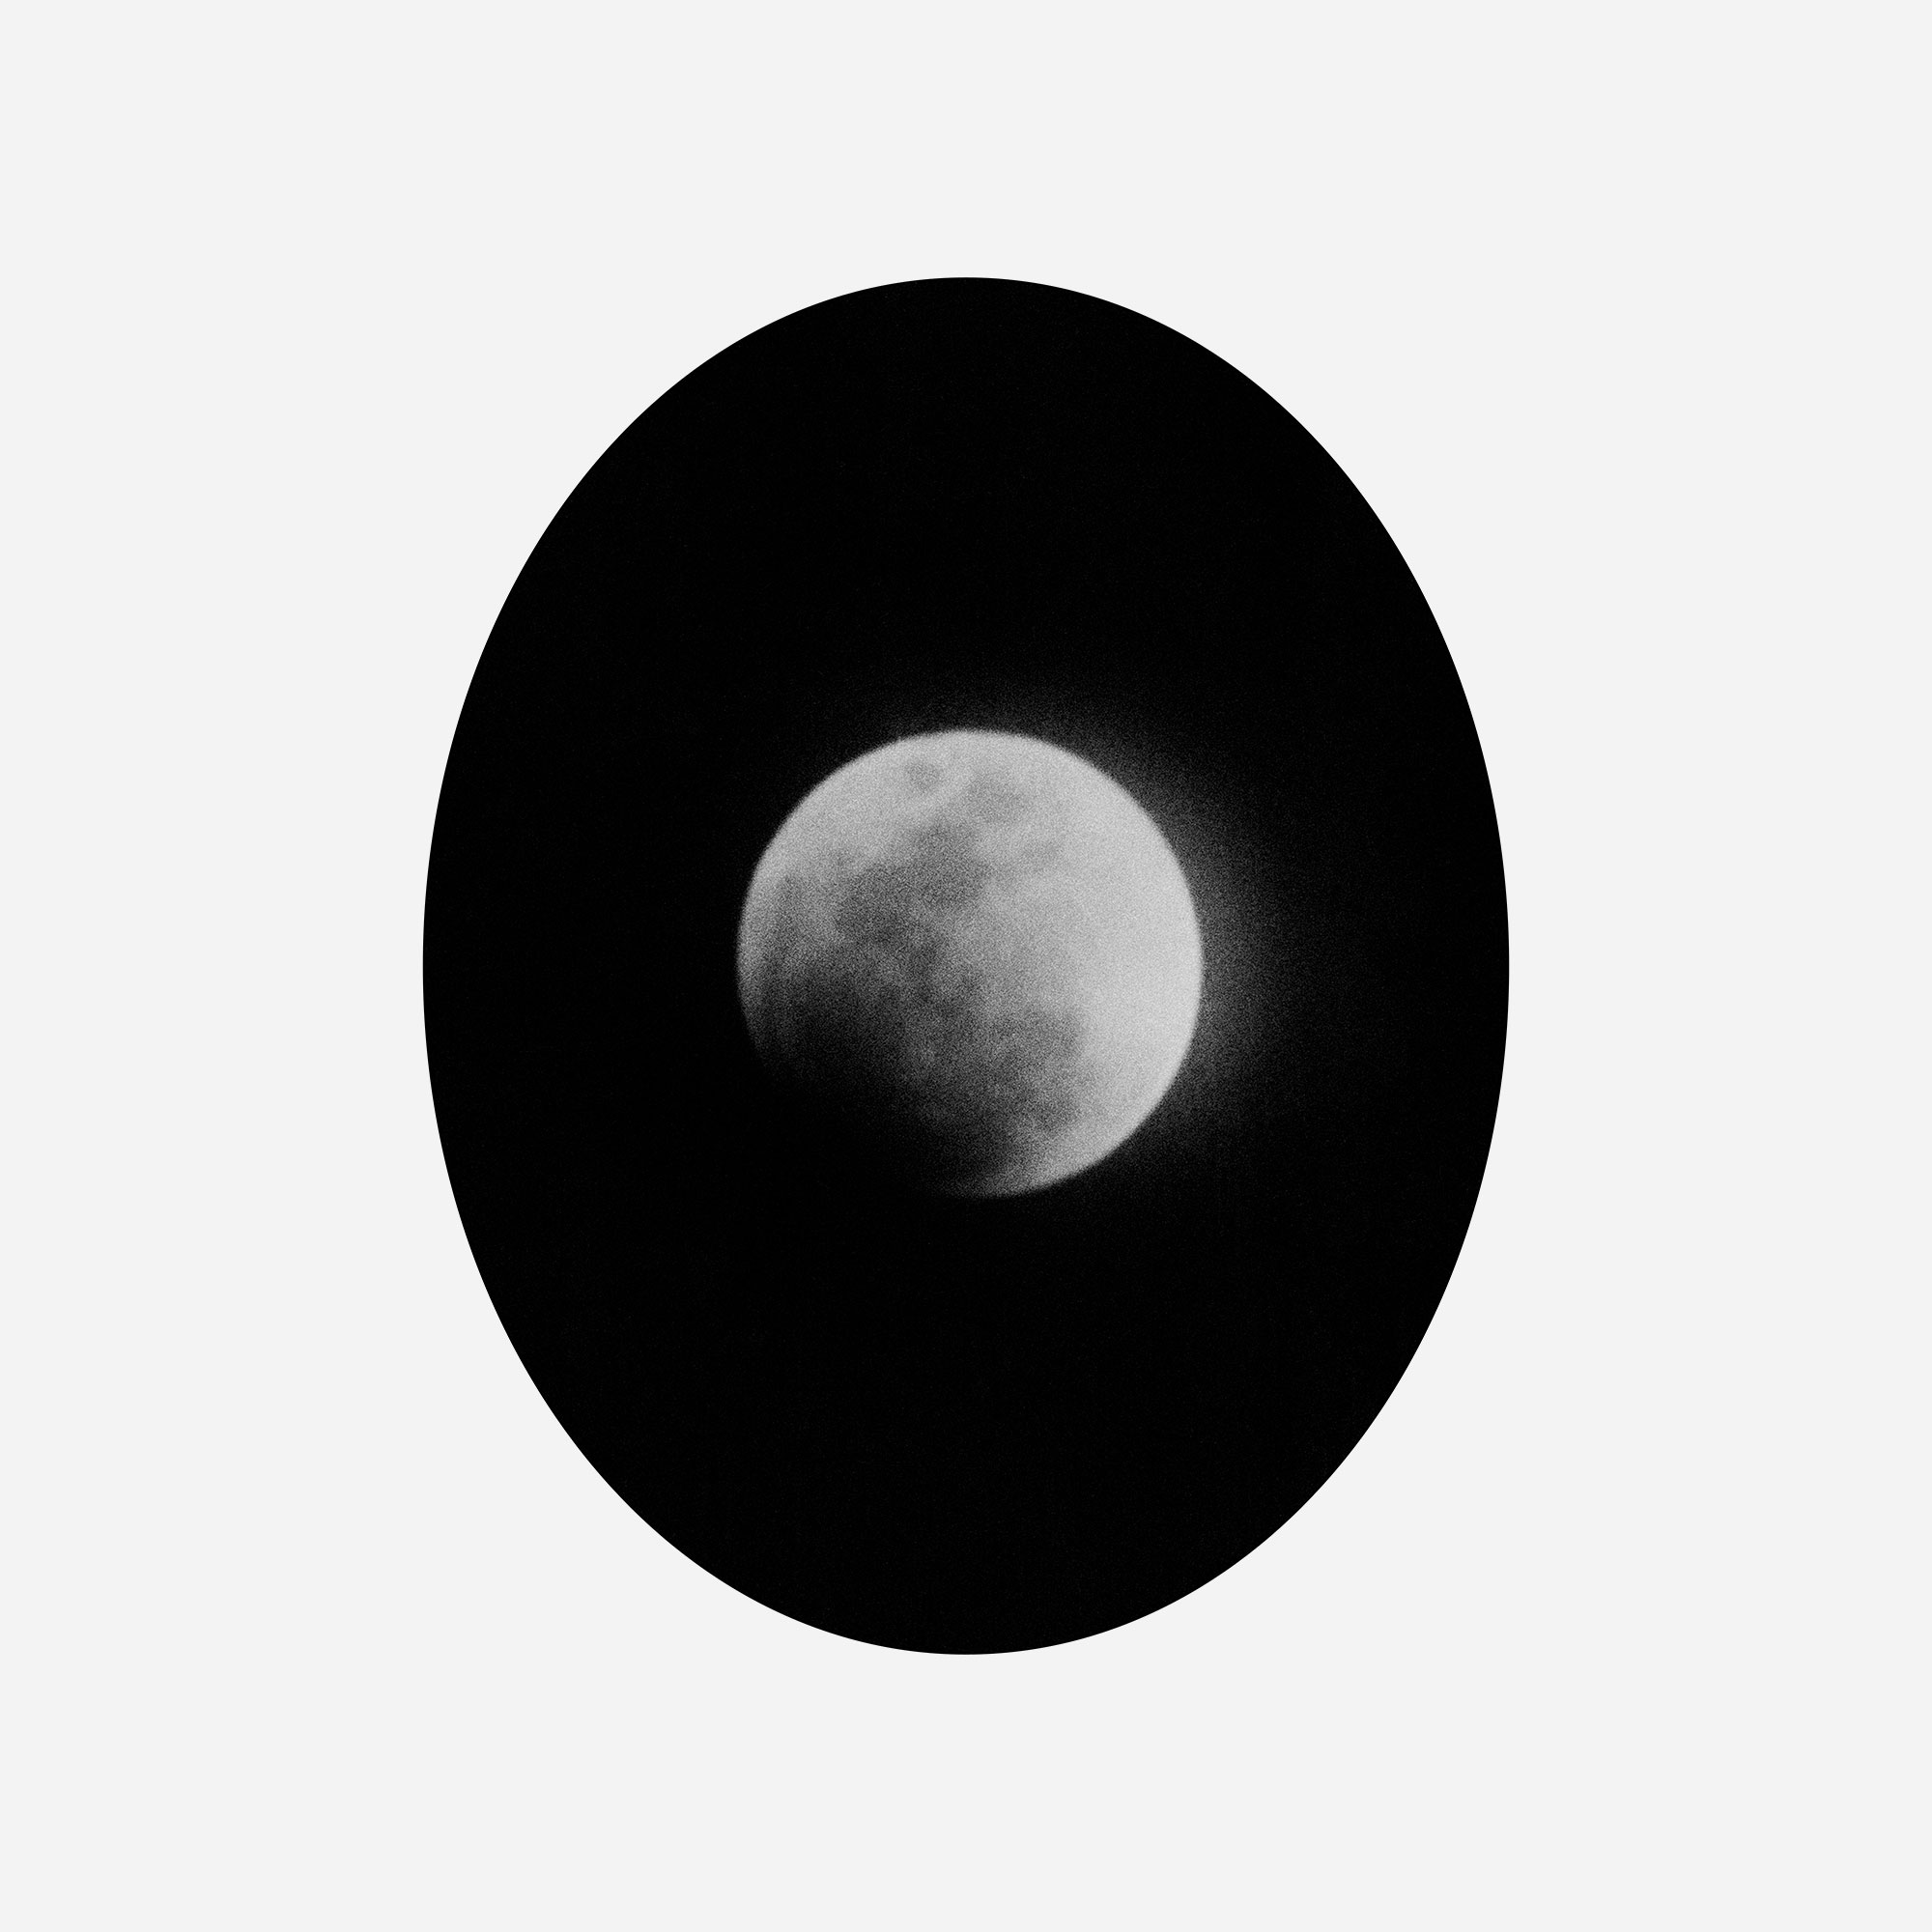 Gæst No. 14, Eclipsing Moon, 2012